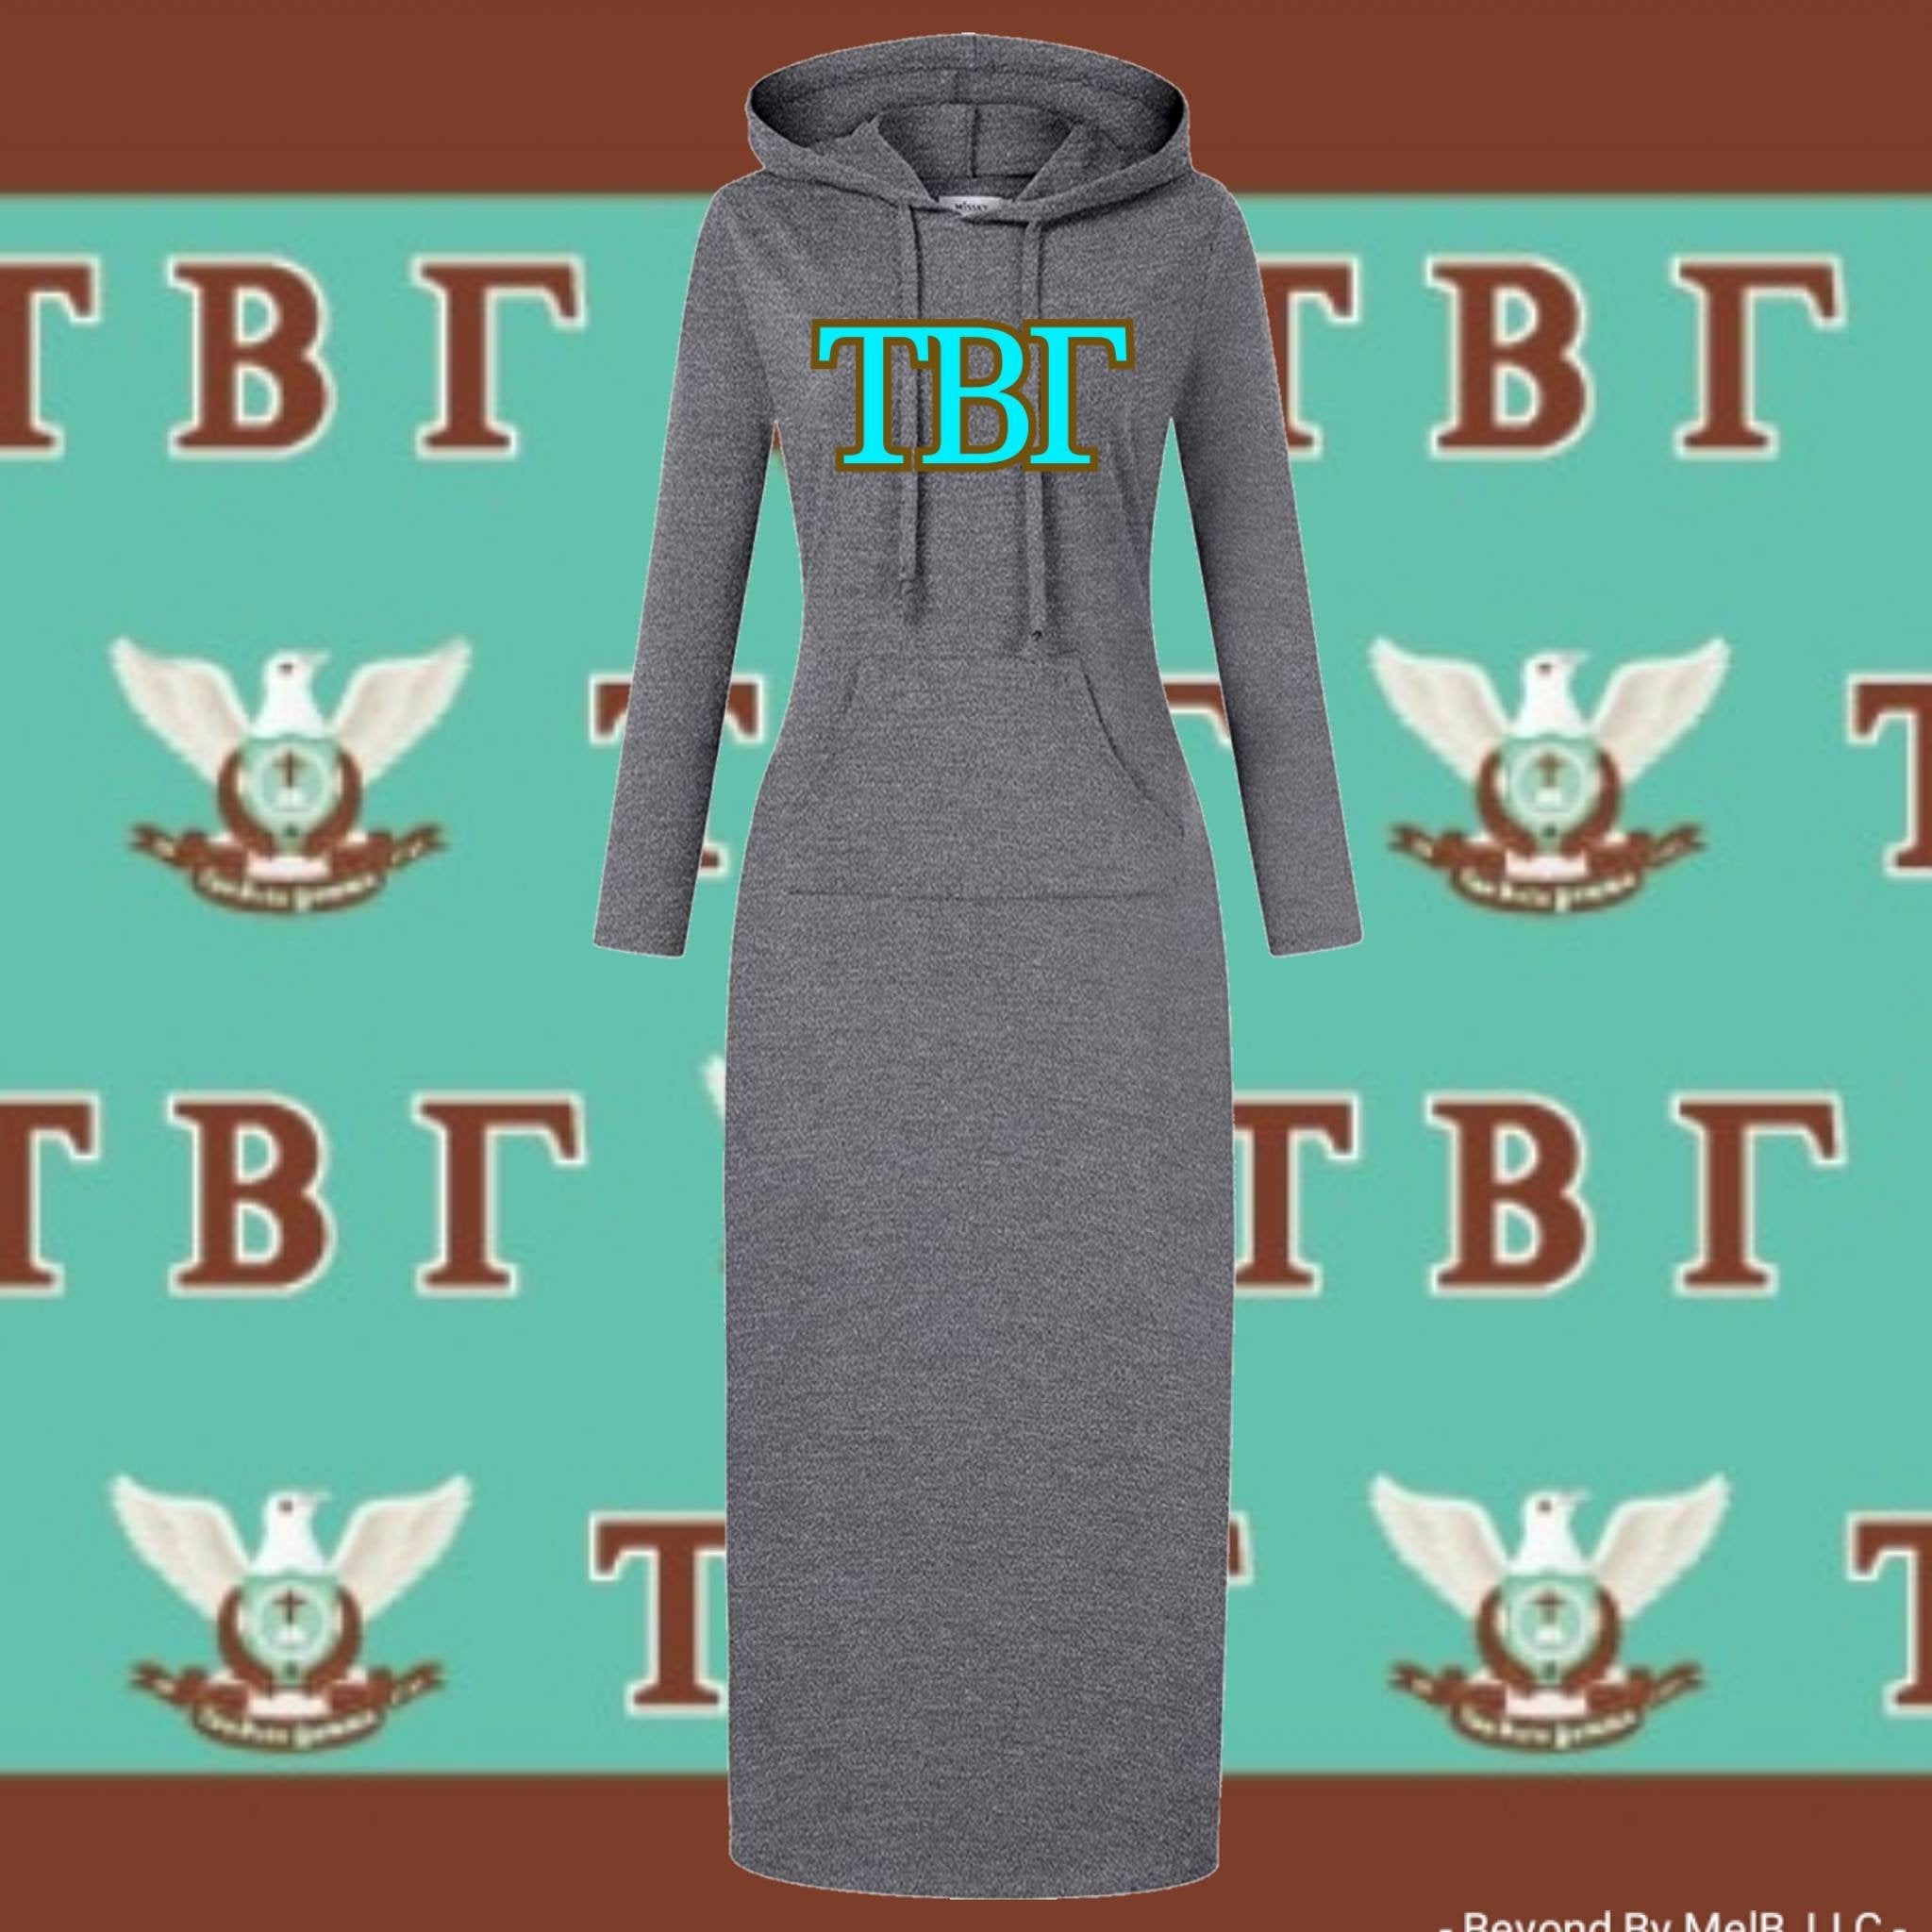 Tau Beta Gamma Hooded Dress